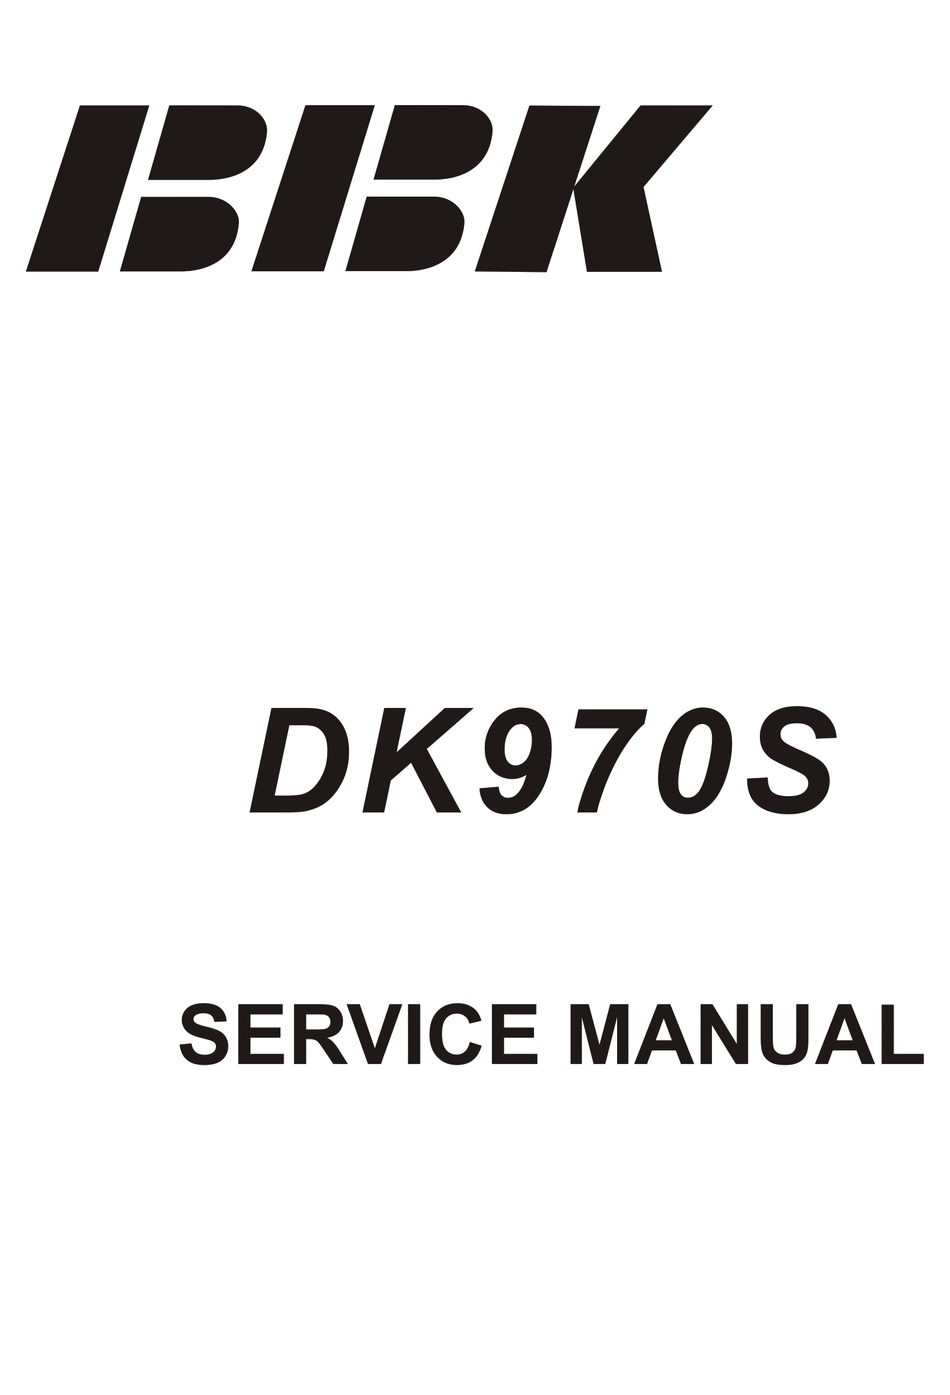 BBK DK970S SERVICE MANUAL Pdf Download | ManualsLib